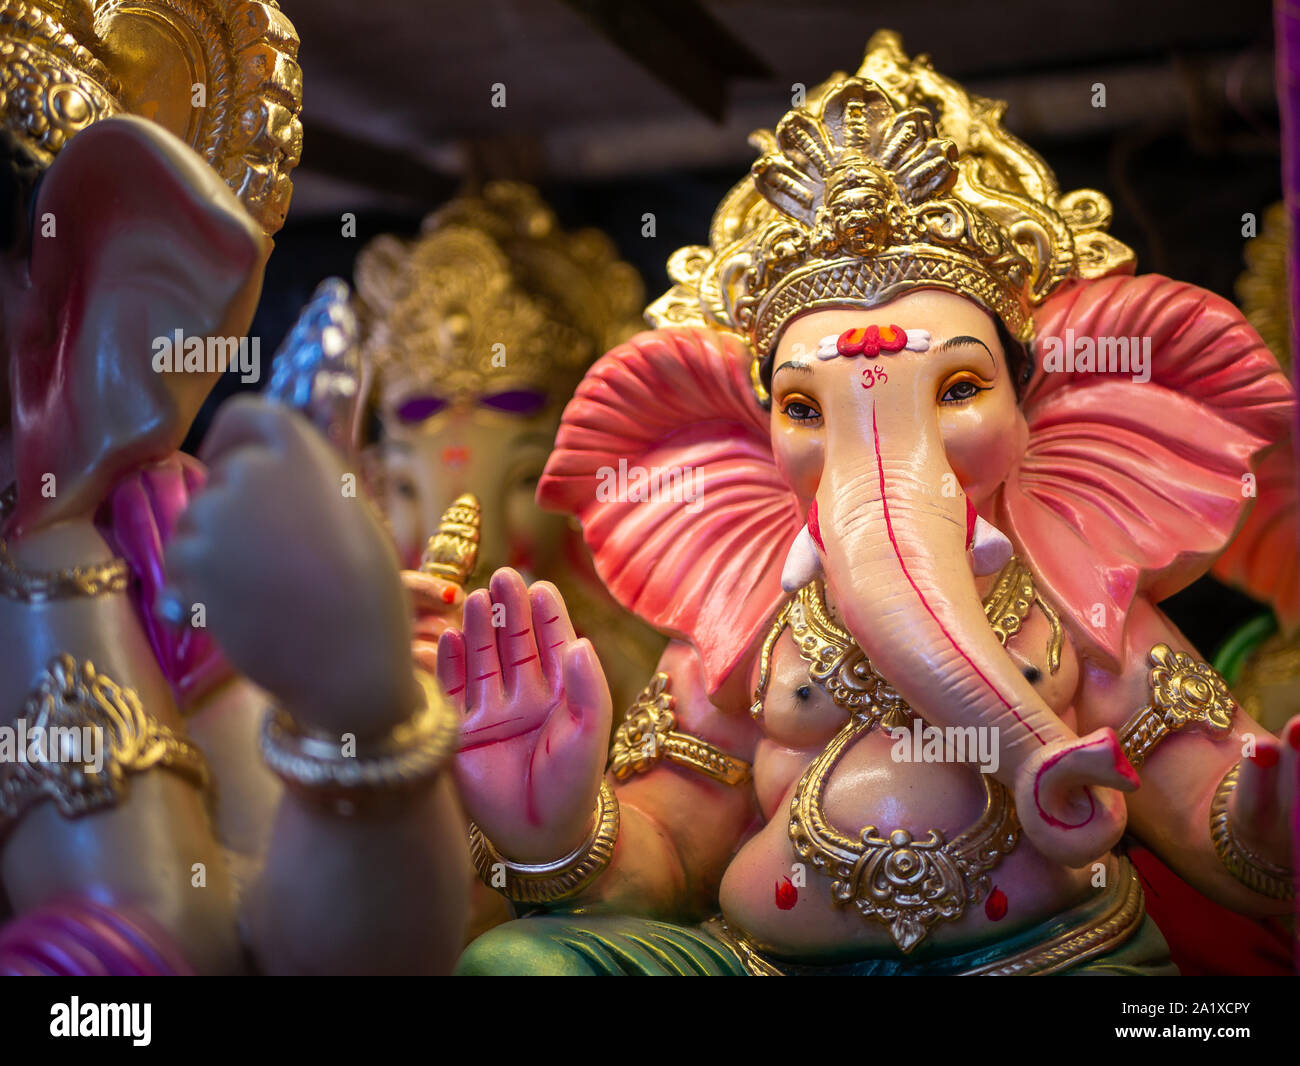 Statue of Lord Ganesha ready for Ganesh festival Stock Photo - Alamy